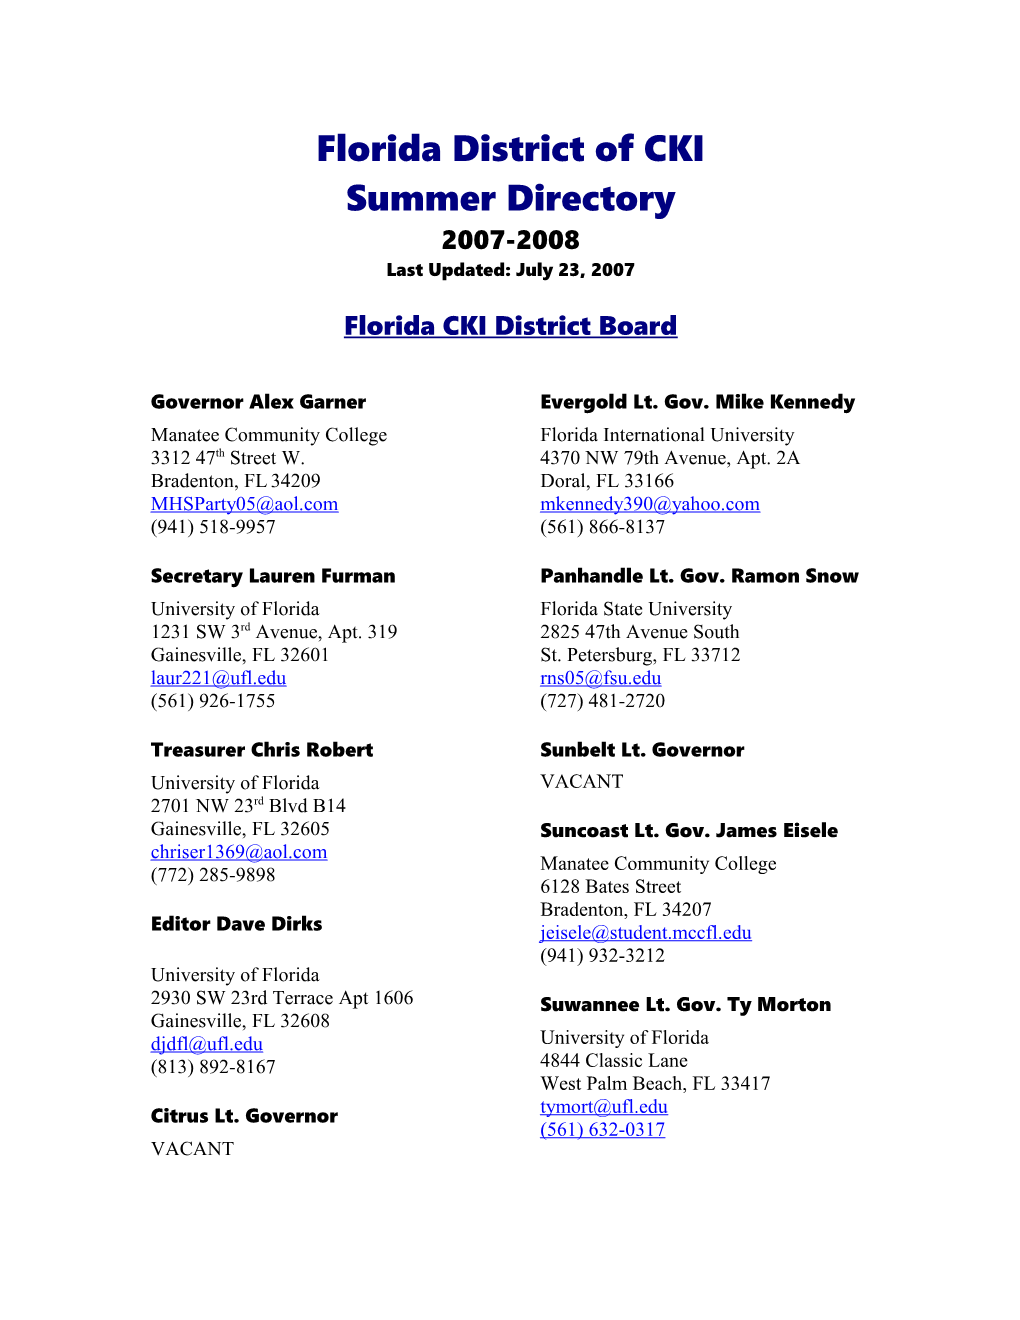 Florida District CKI Board